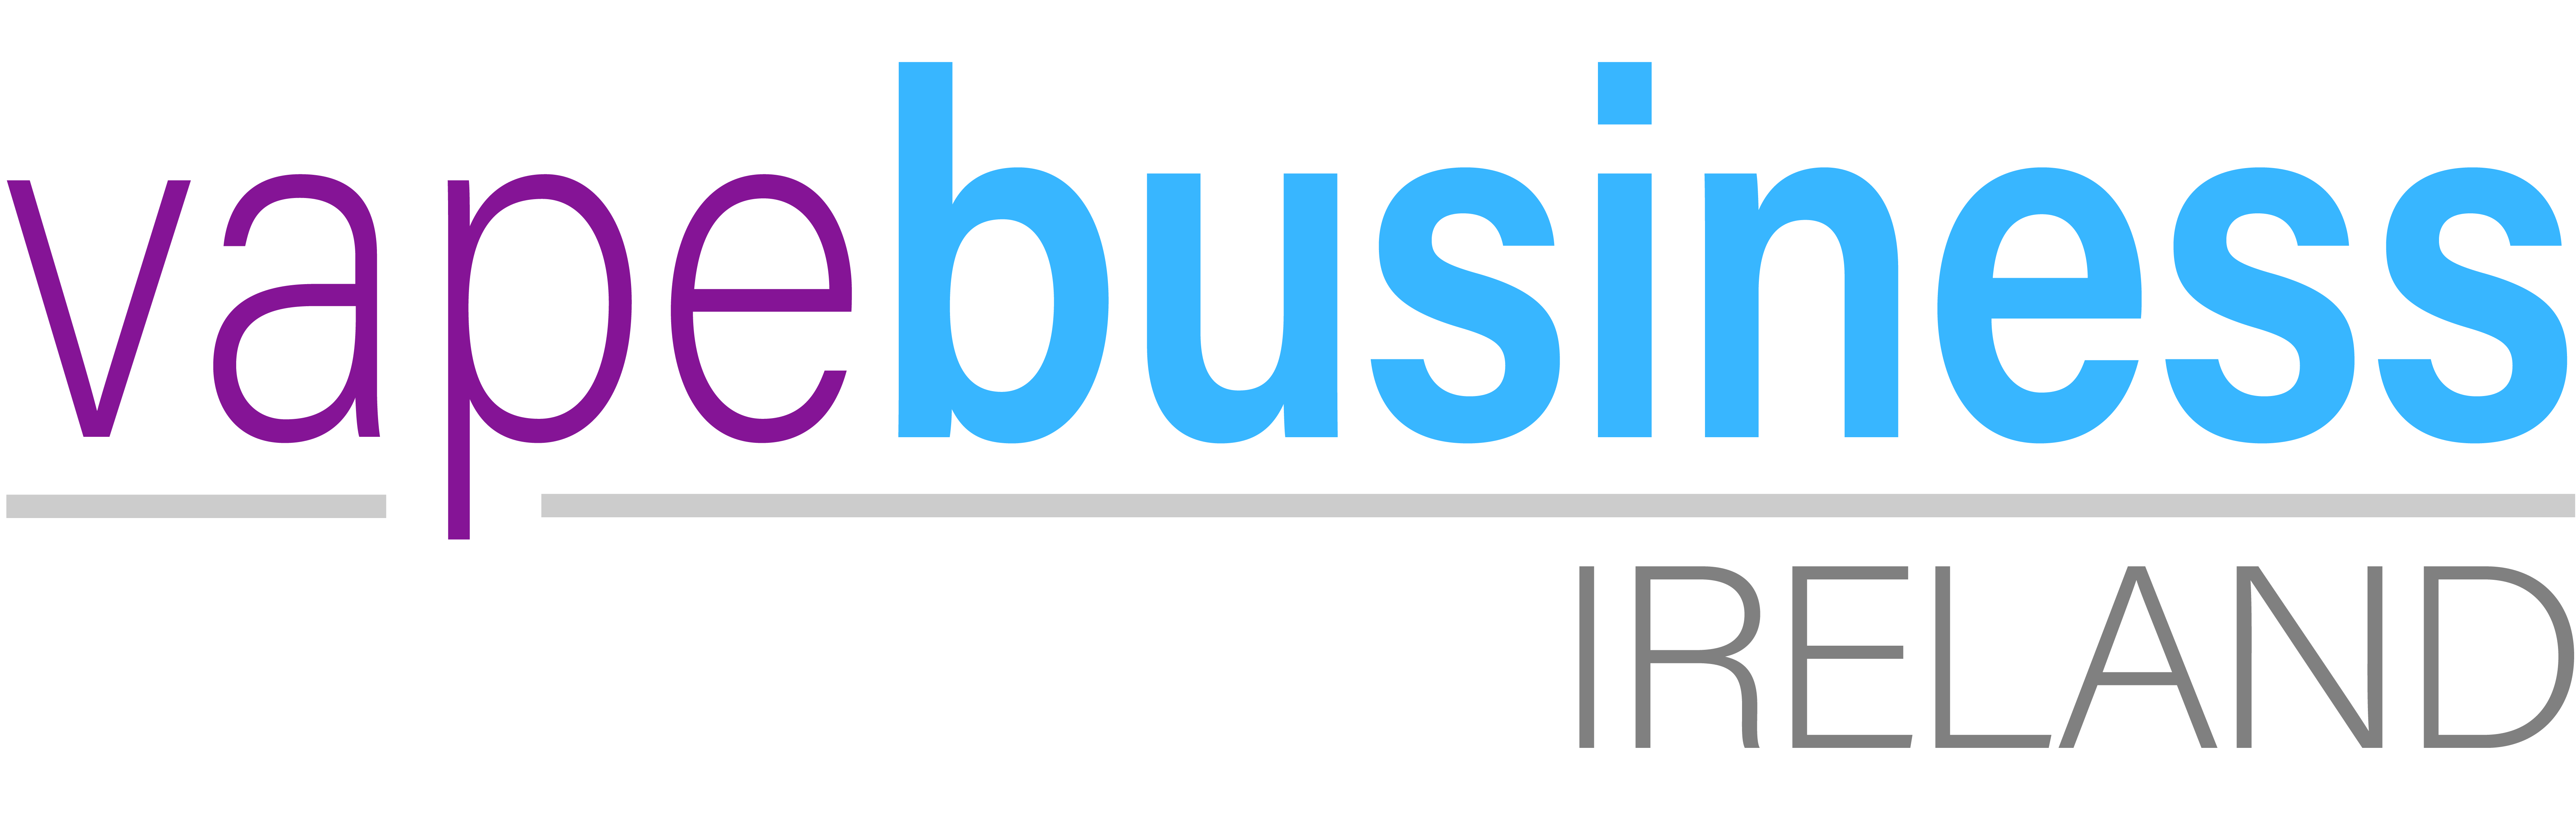 Vape Business Ireland Logo 2